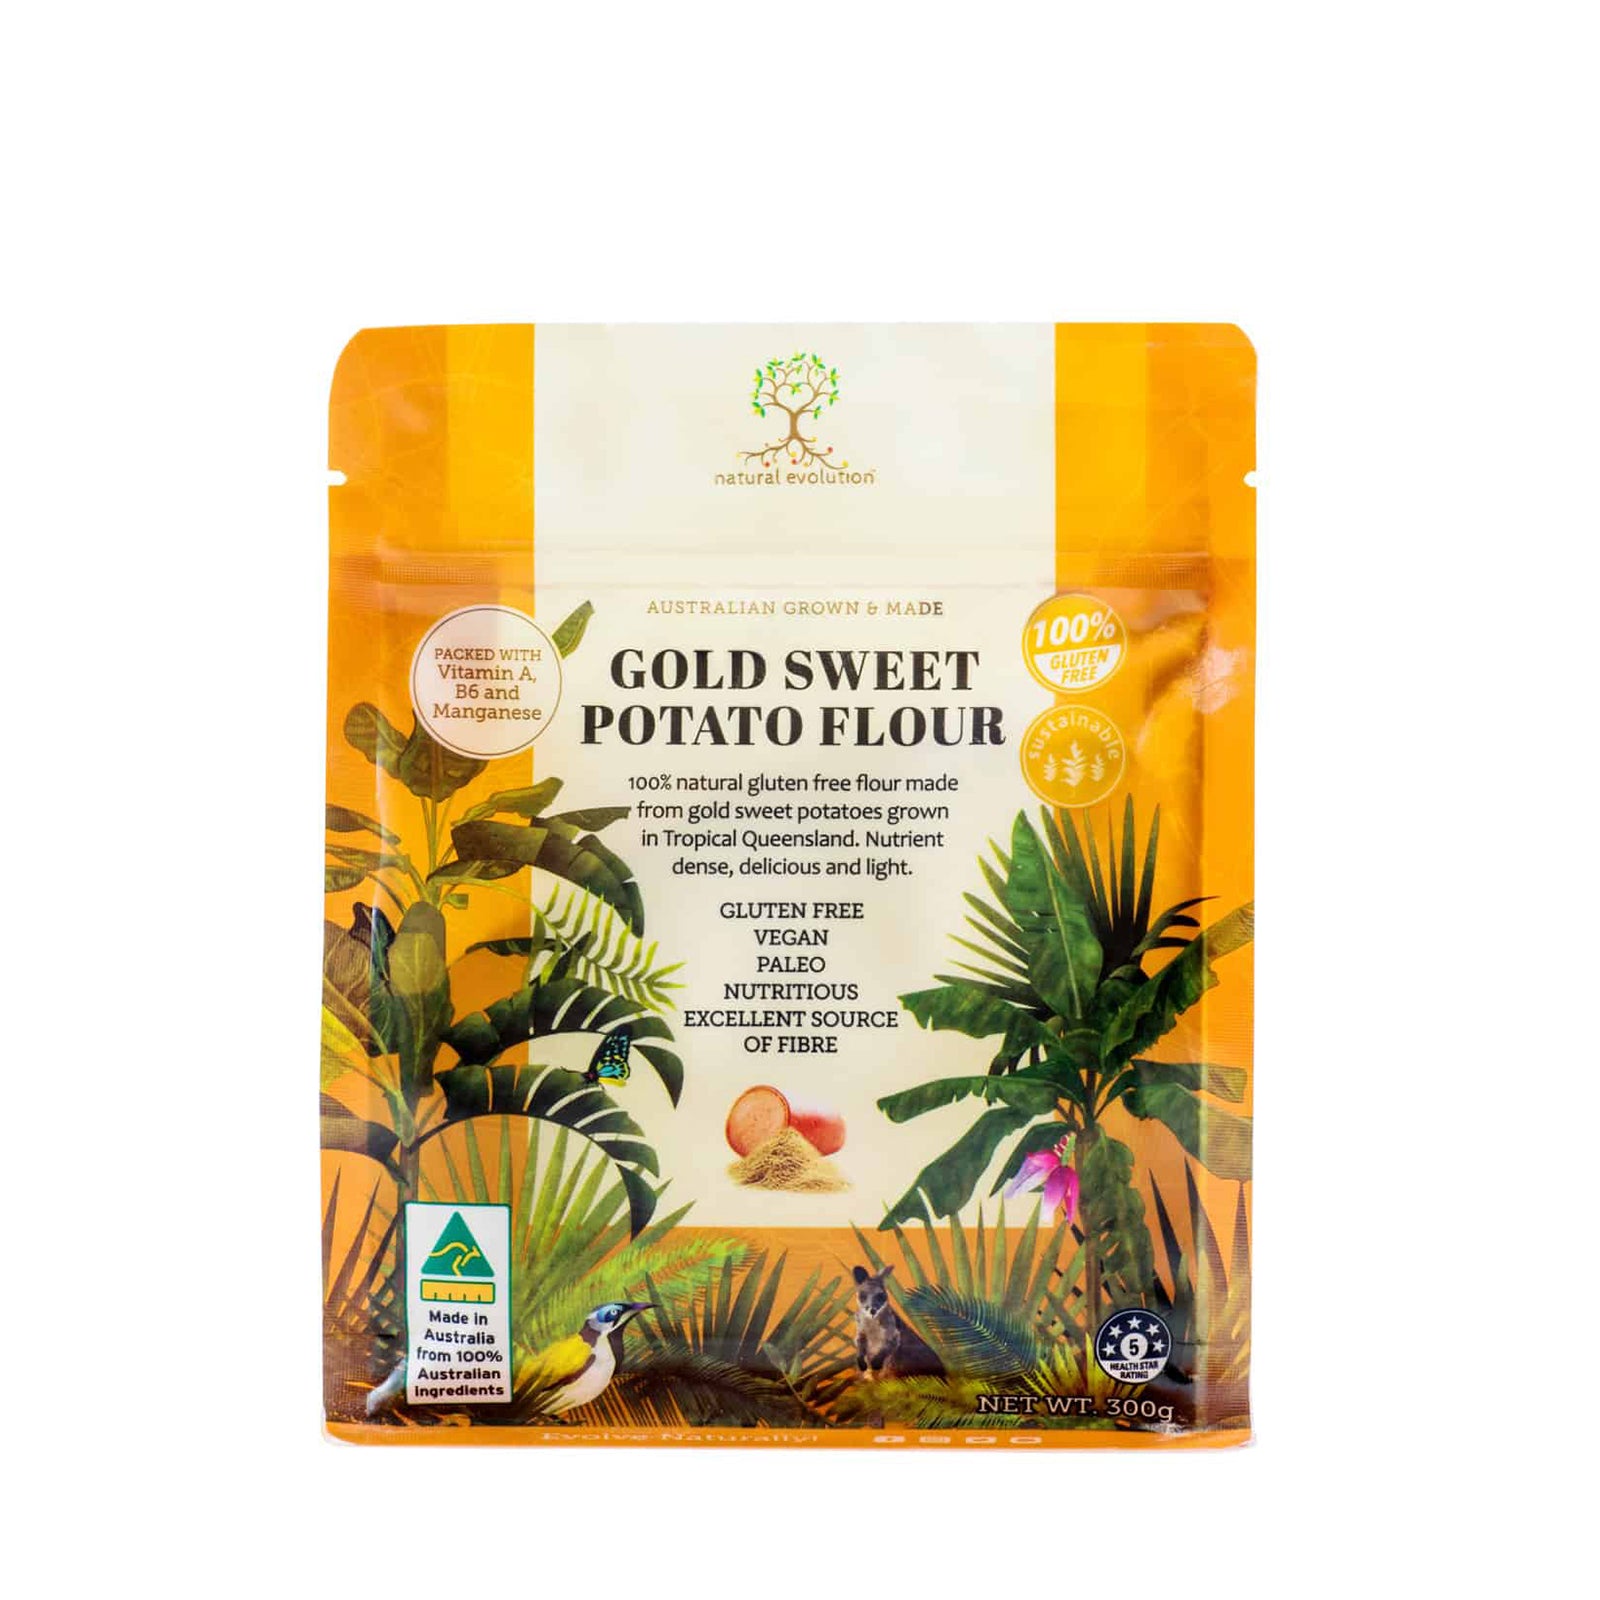 Natural Evolution Gold Sweet Potato Flour-The Living Co.